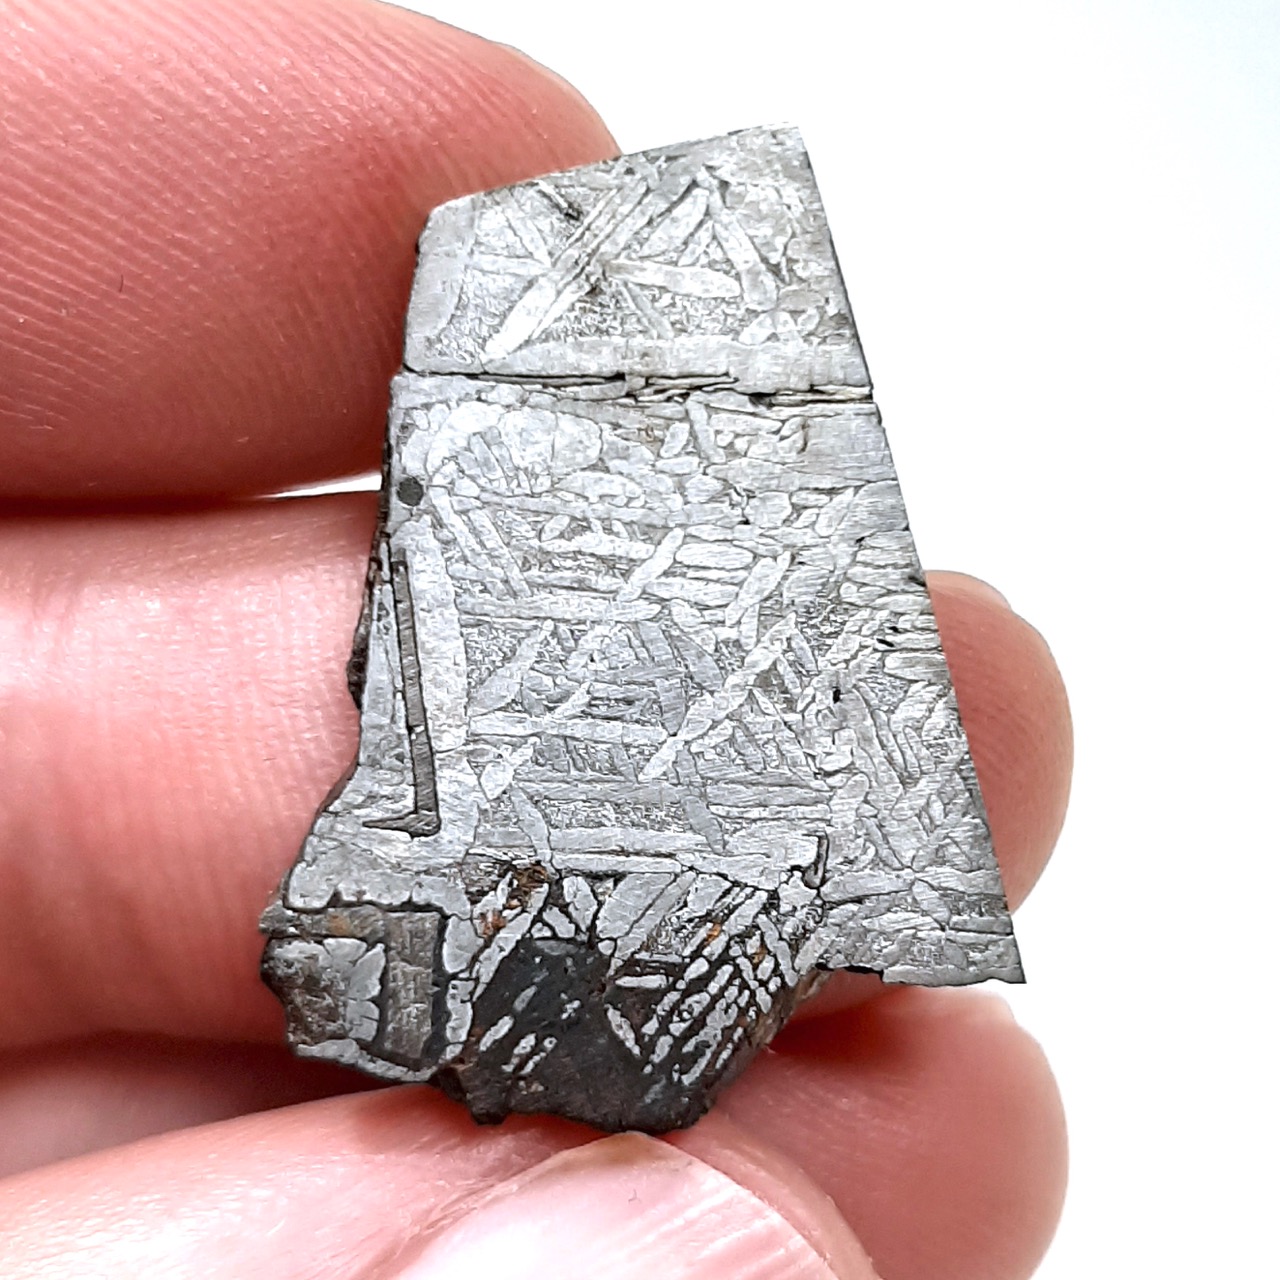 Bear Creek meteorite. Historic iron from Colorado.